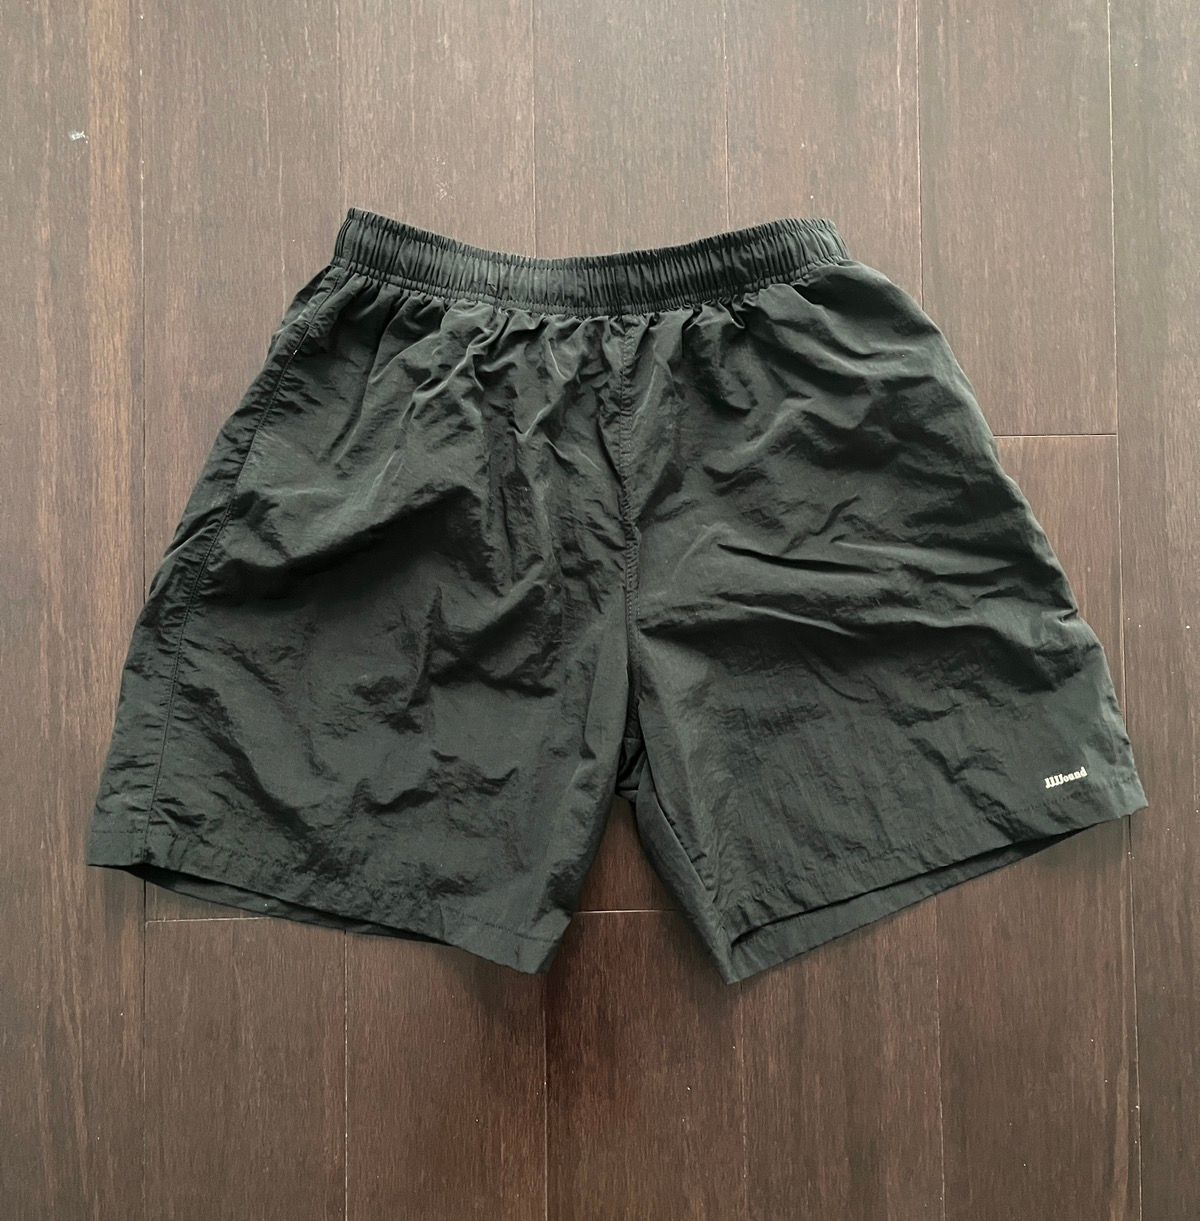 Jjjjound Camper Shorts 7” Black Made in Canada | Grailed